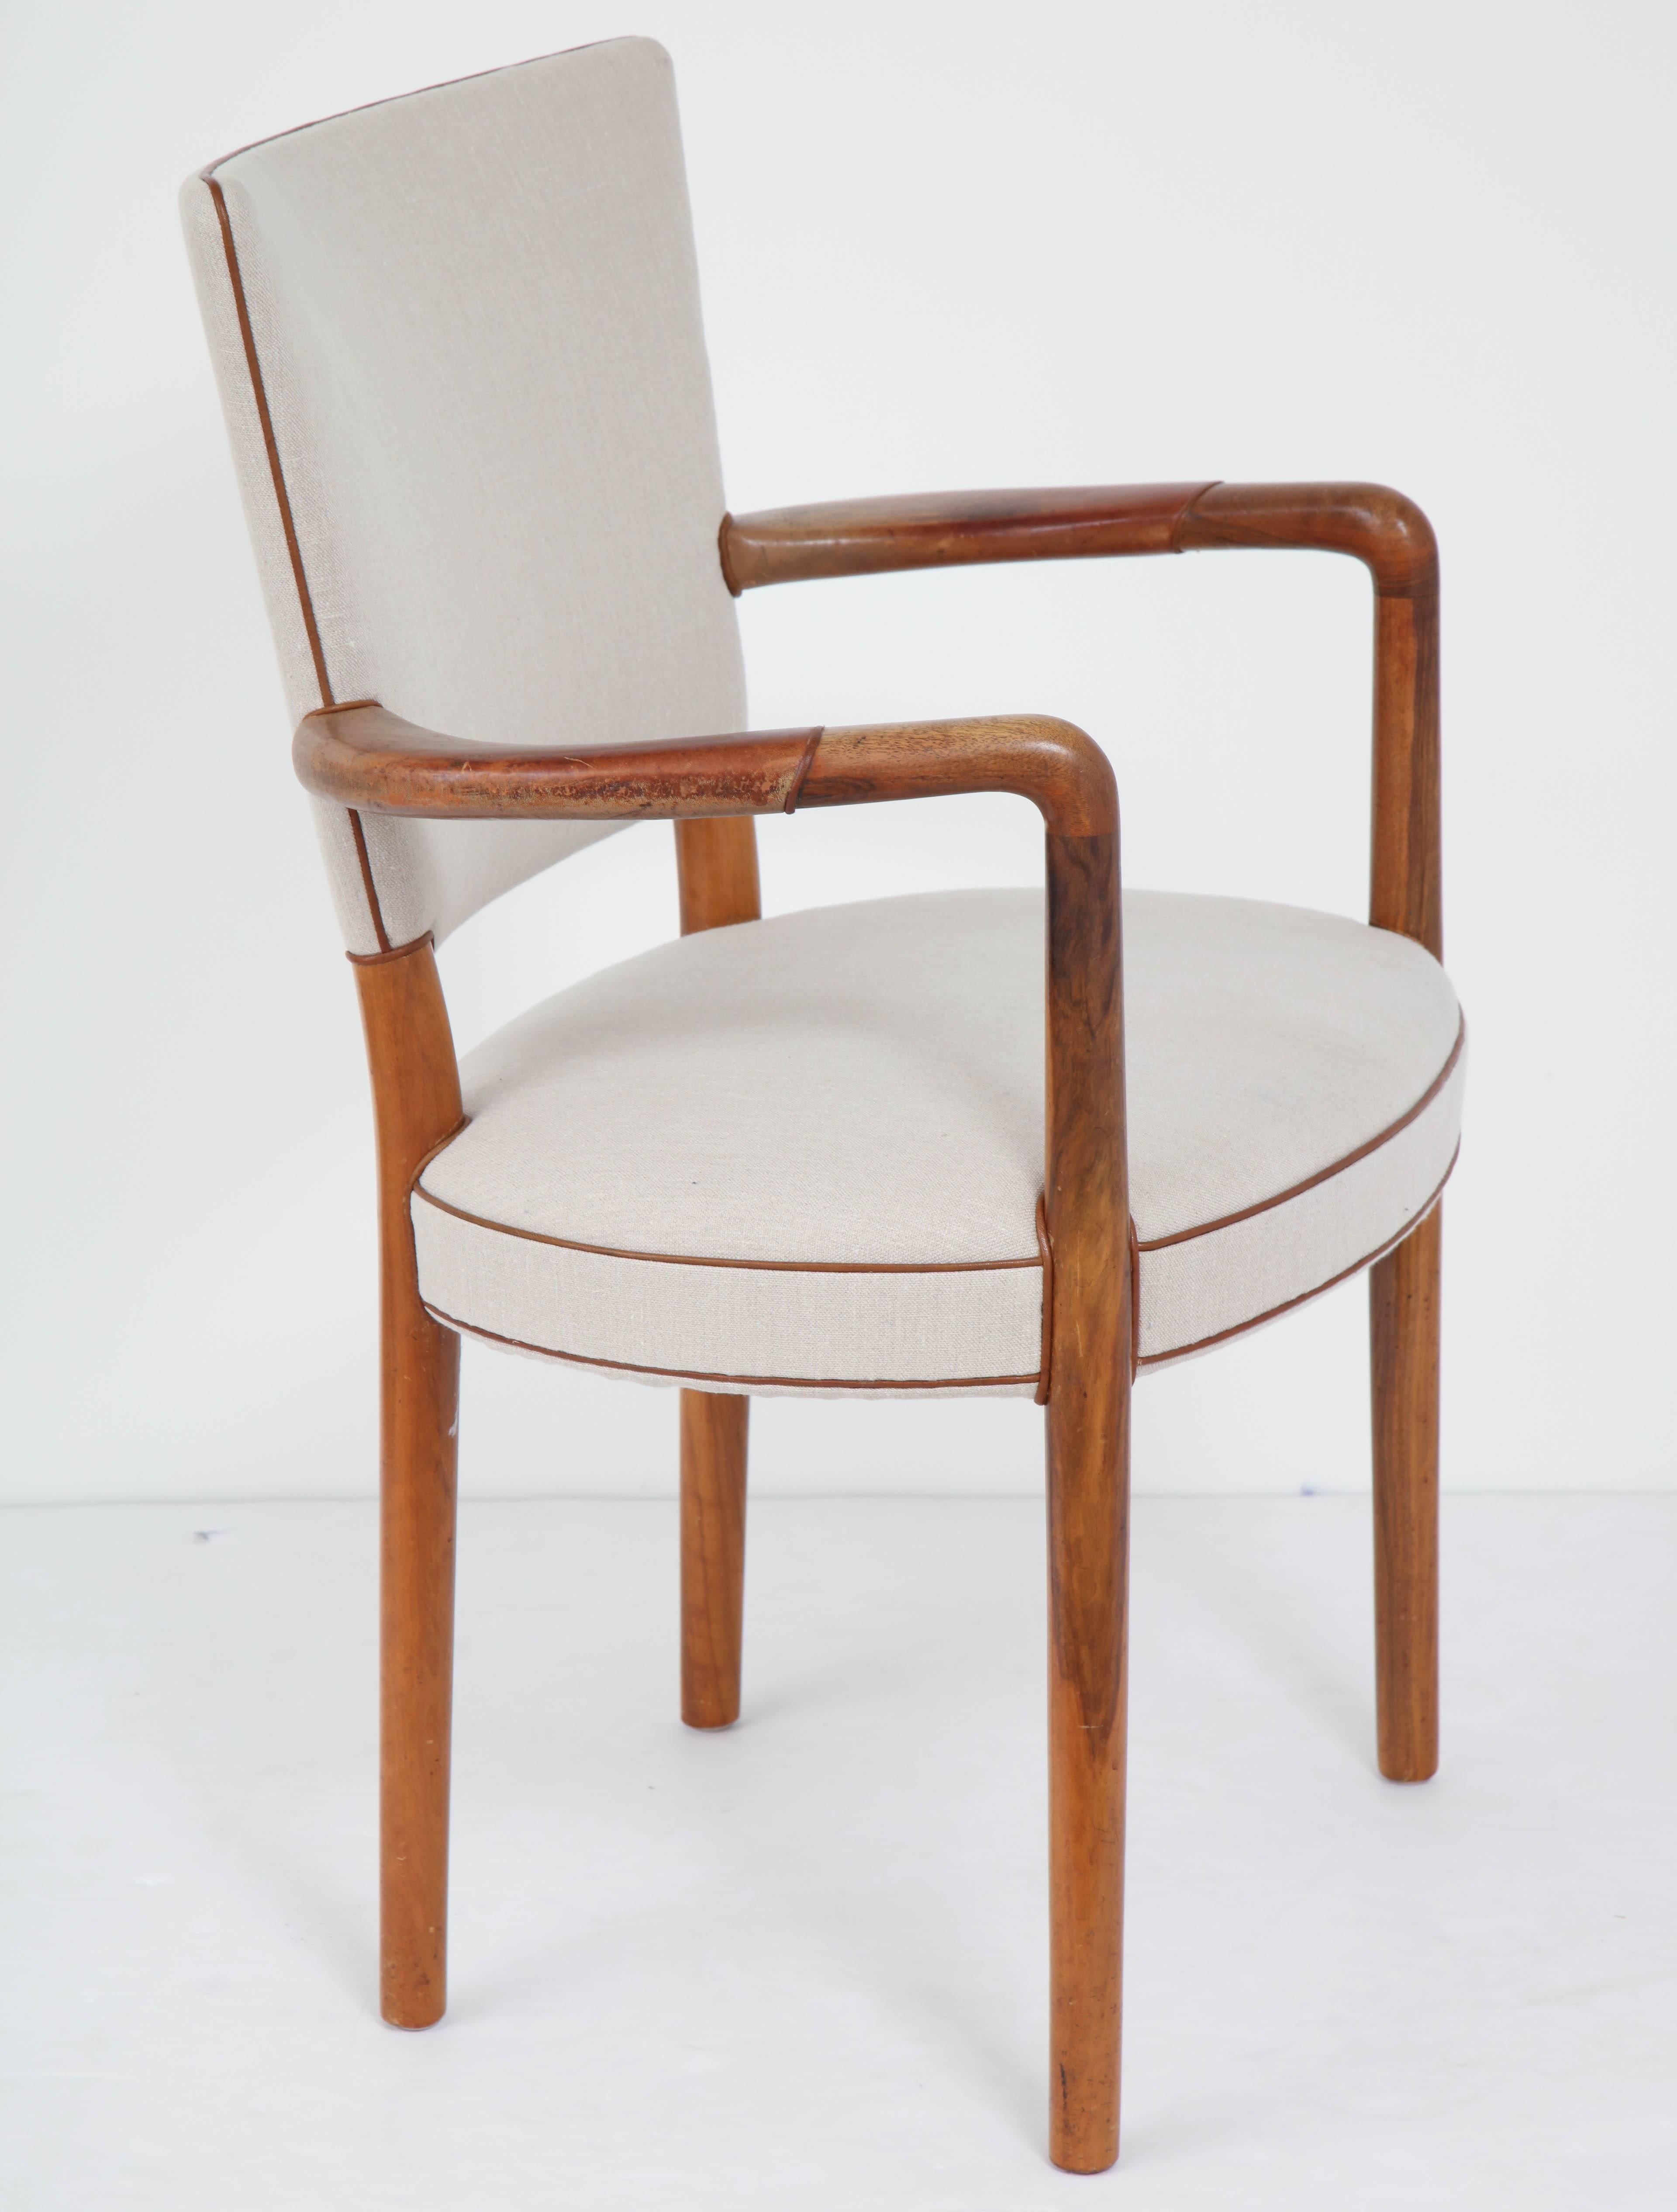 Mid-20th Century Rare Danish Design Chair by Flemming Lassen and Arne Jacobsen, circa 1950s